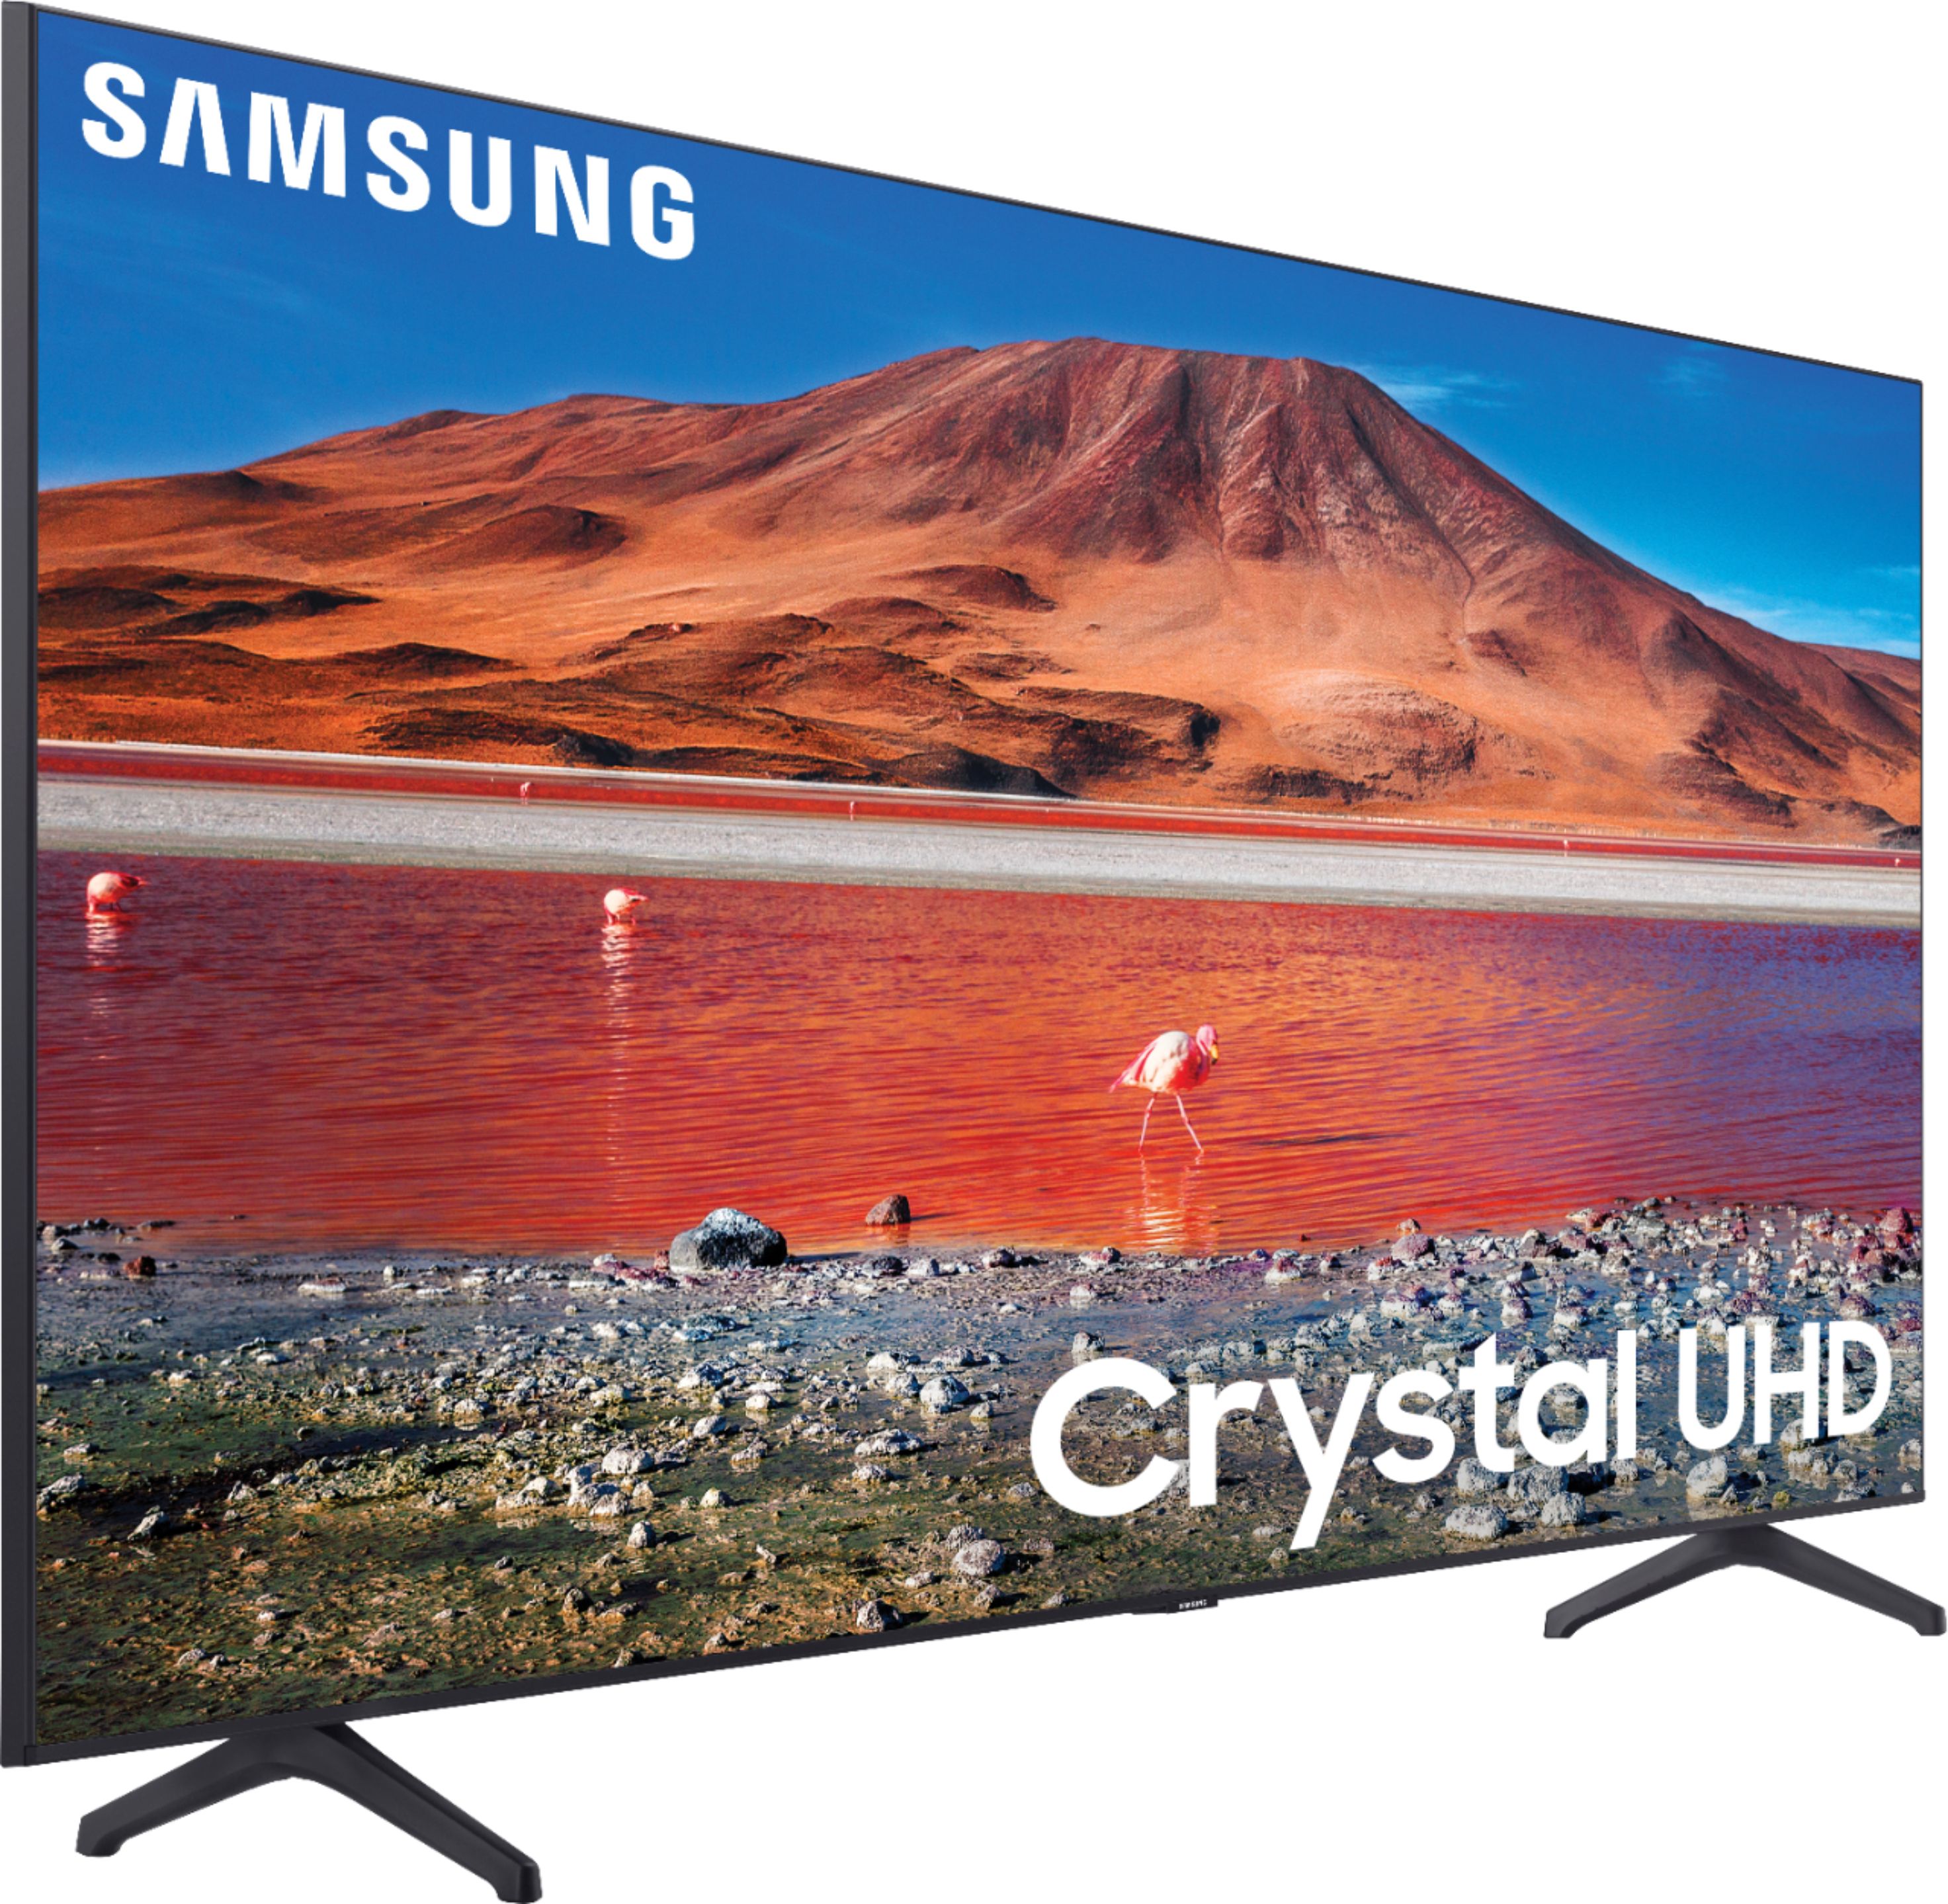 Samsung 55 Class TU8300 Curved LED 4K UHD Smart Tizen TV UN55TU8300FXZA -  Best Buy